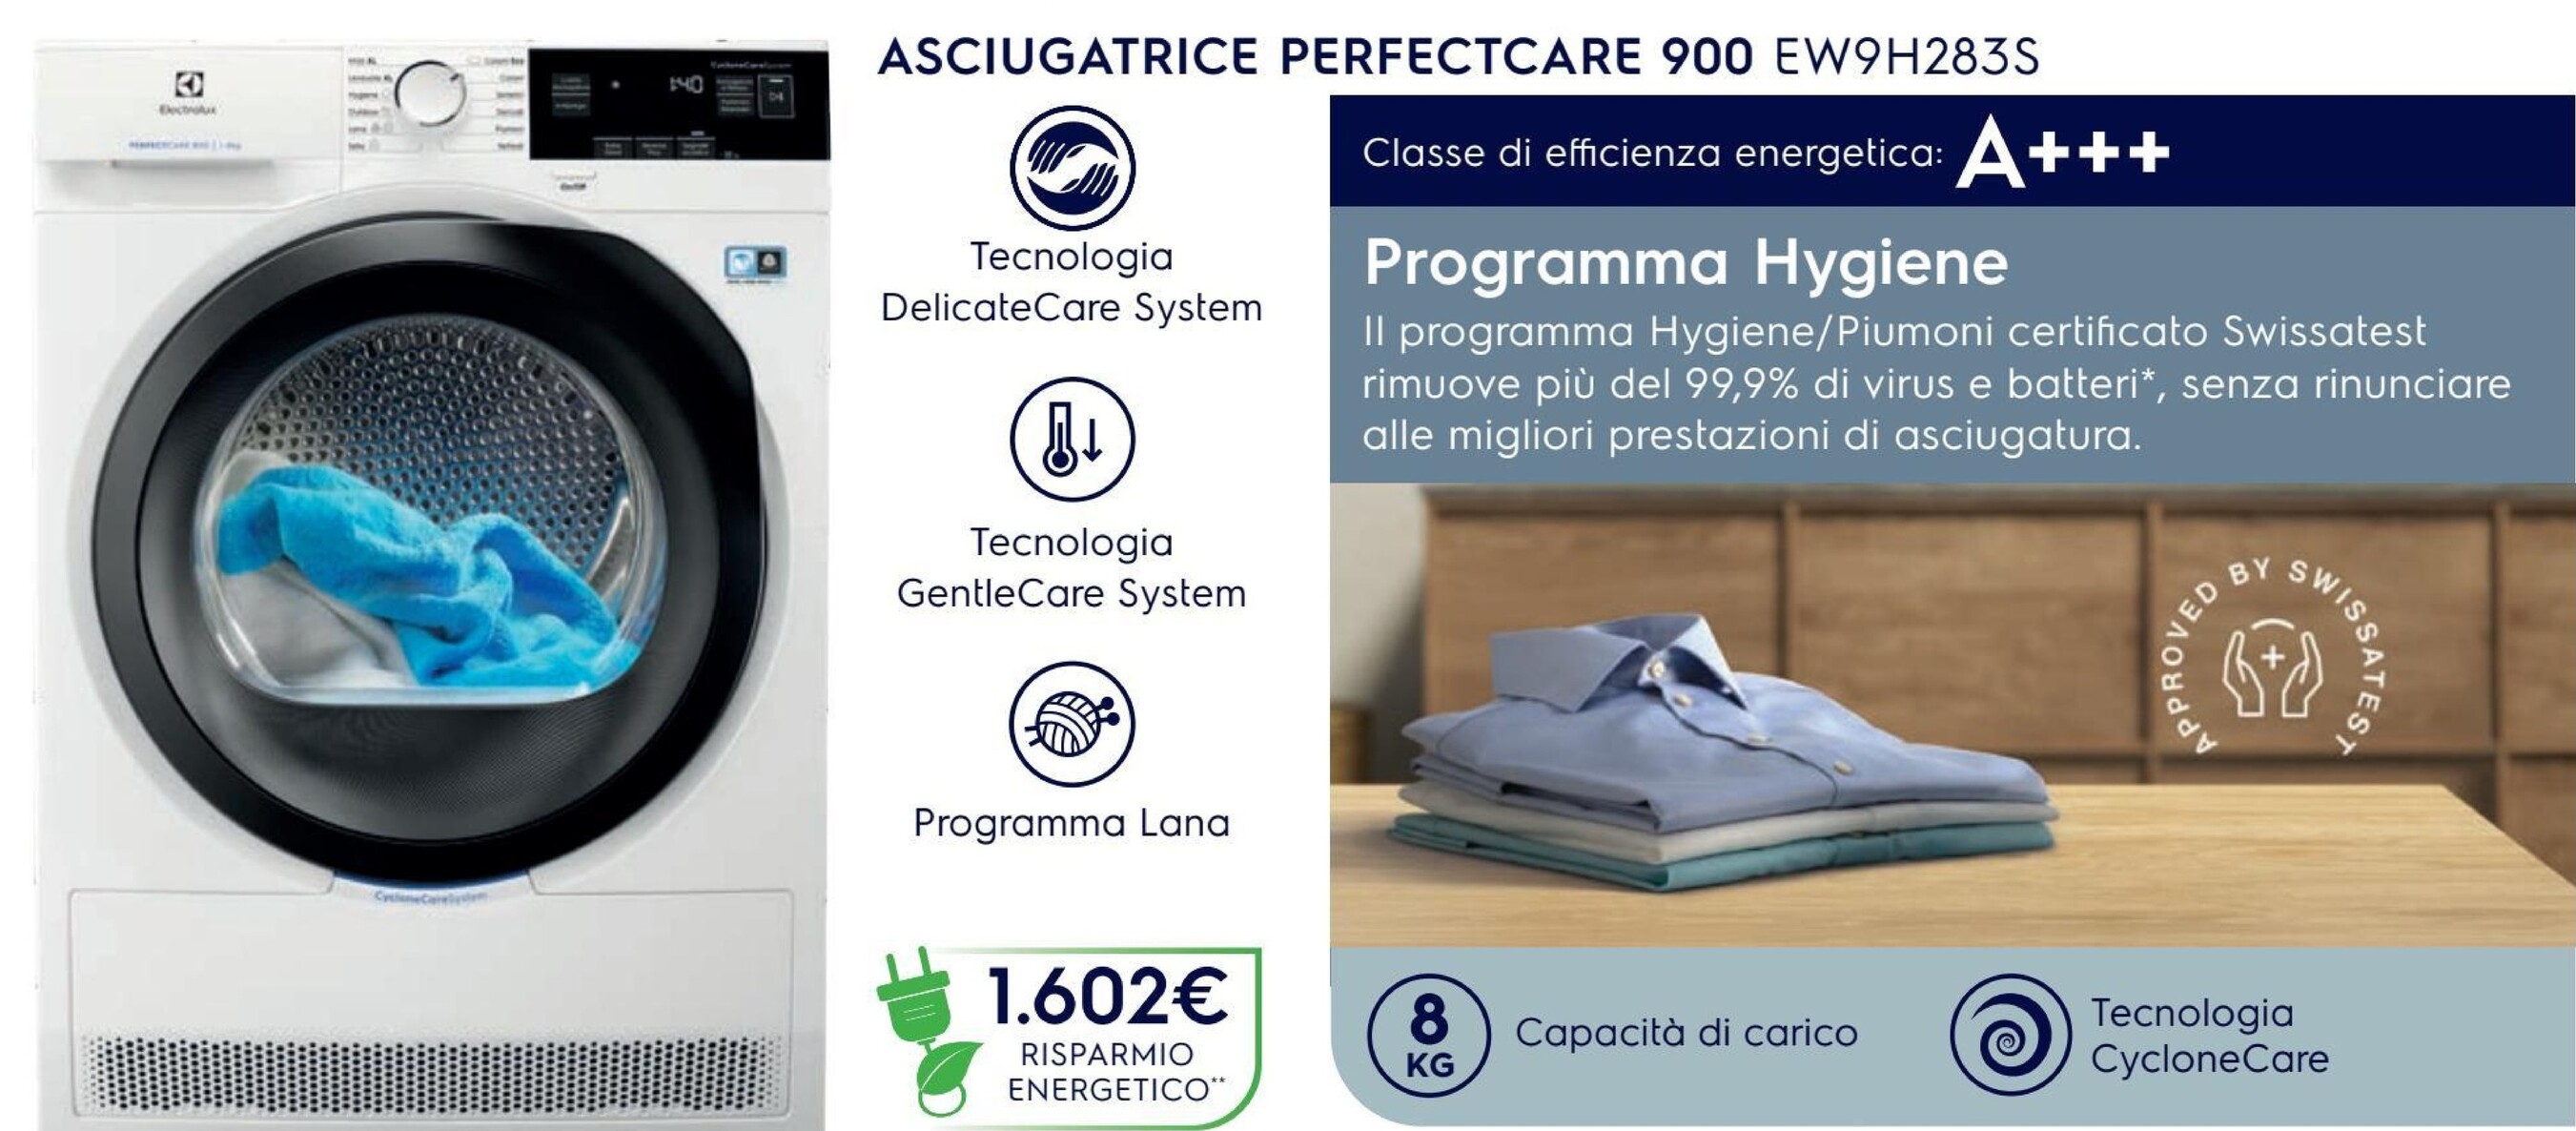 Offerta per Electrolux Asciugatrice Perfectare 900 EW9H283S a 1602€ in Leonardelli